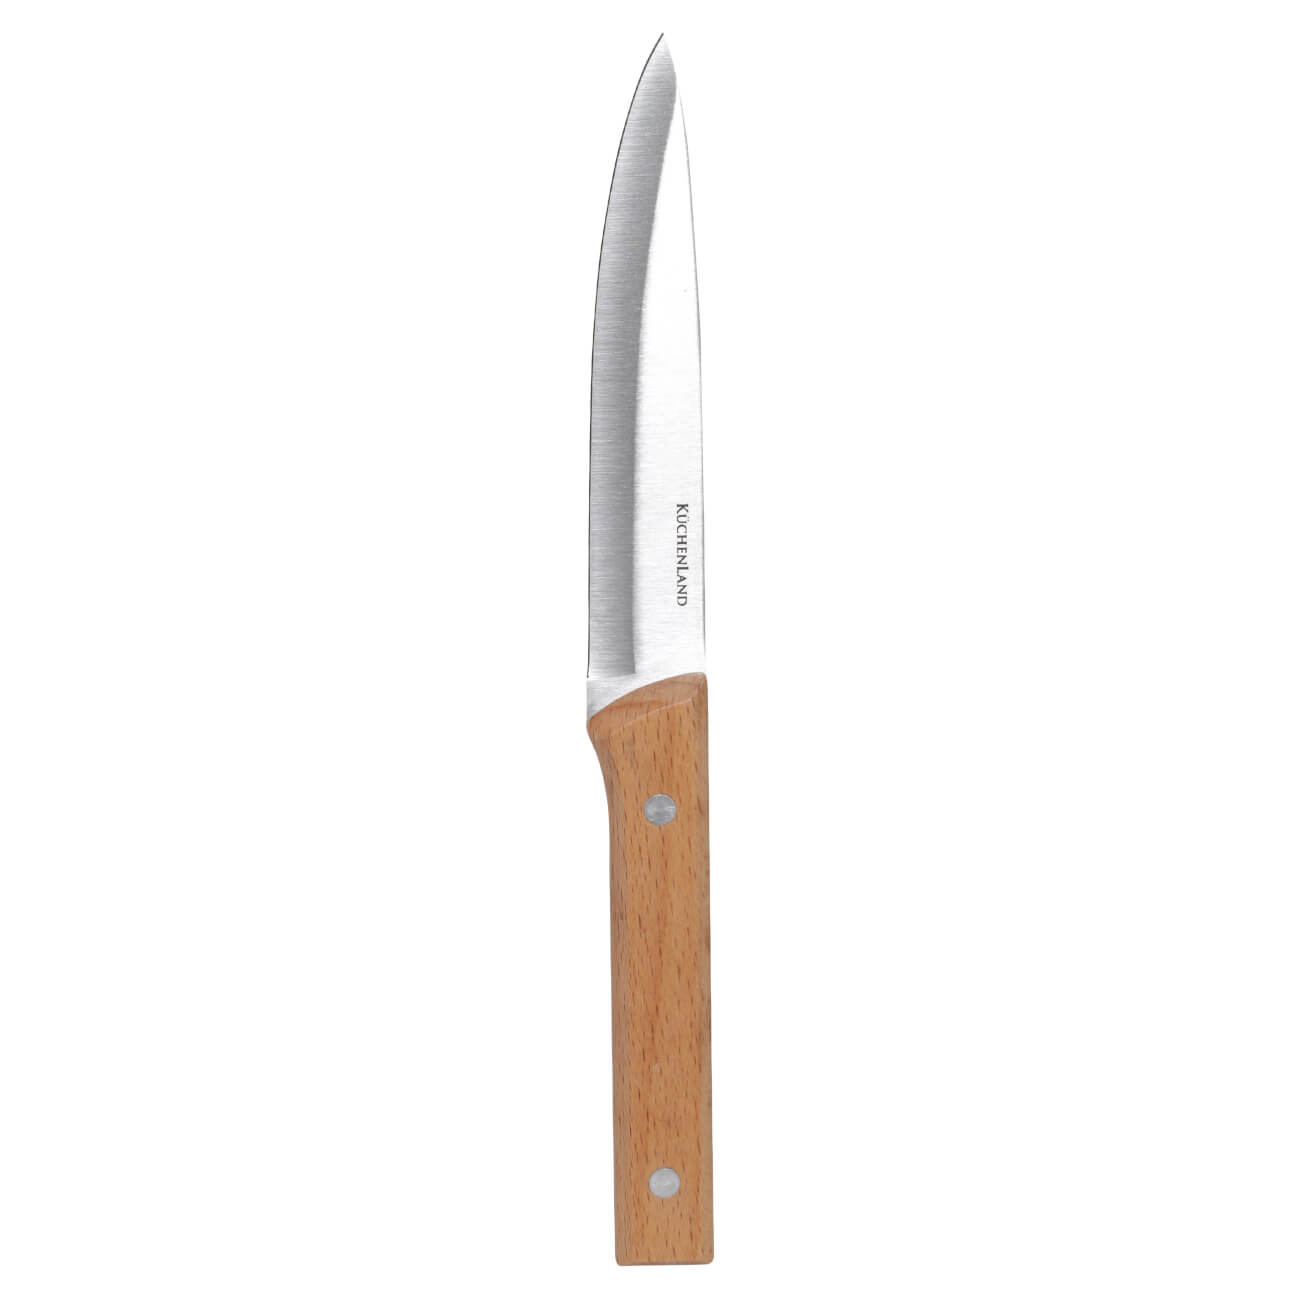 Нож для нарезки, 13 см, сталь/дерево, Eco home